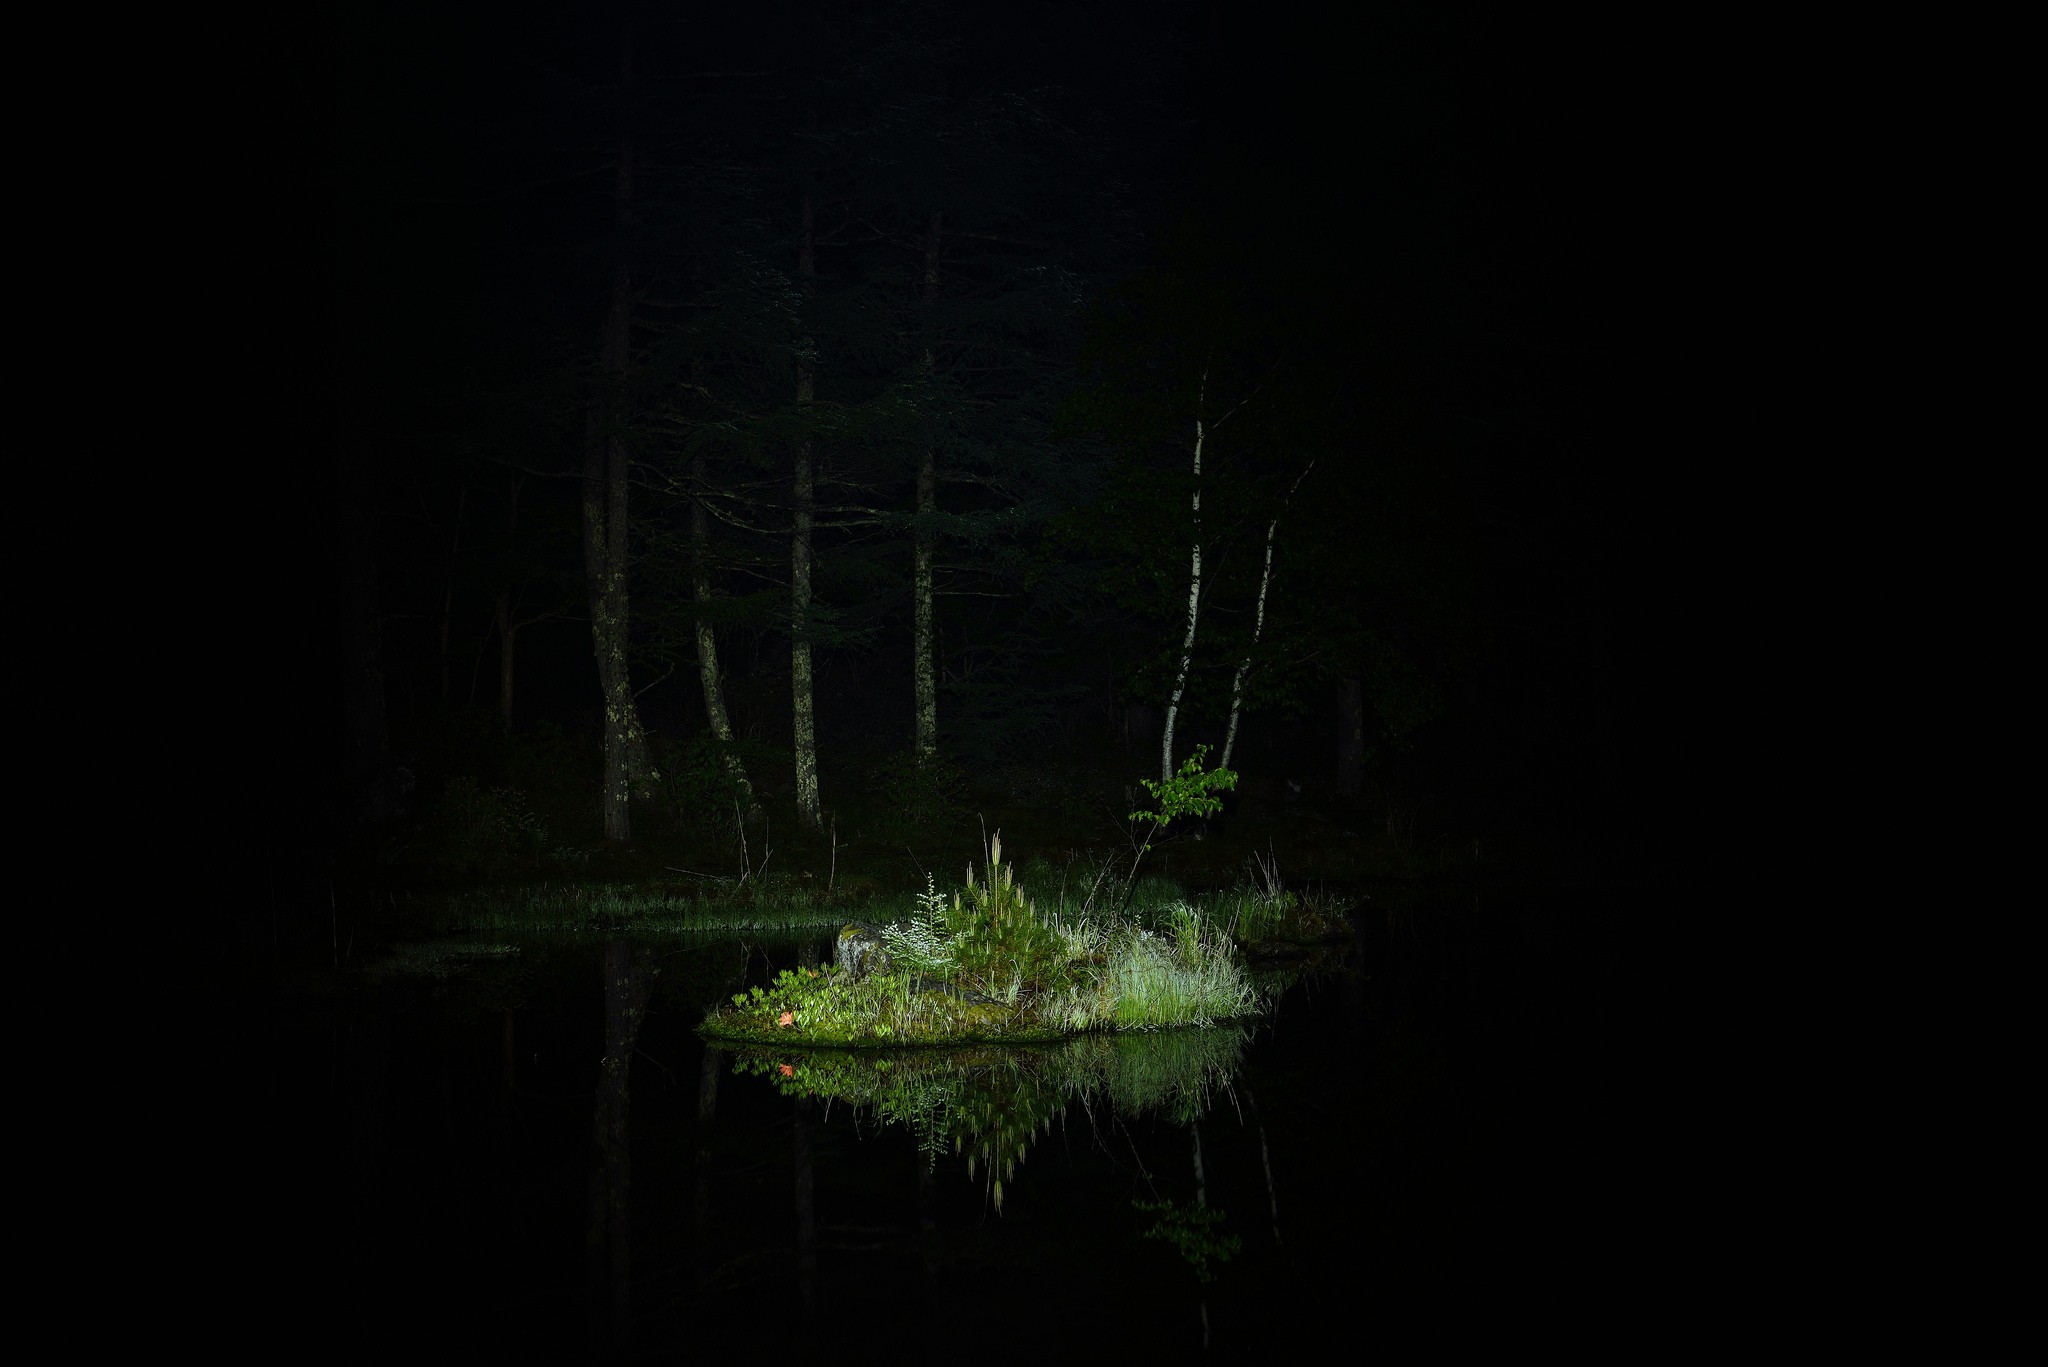 General 2048x1367 night dark plants outdoors trees reflection